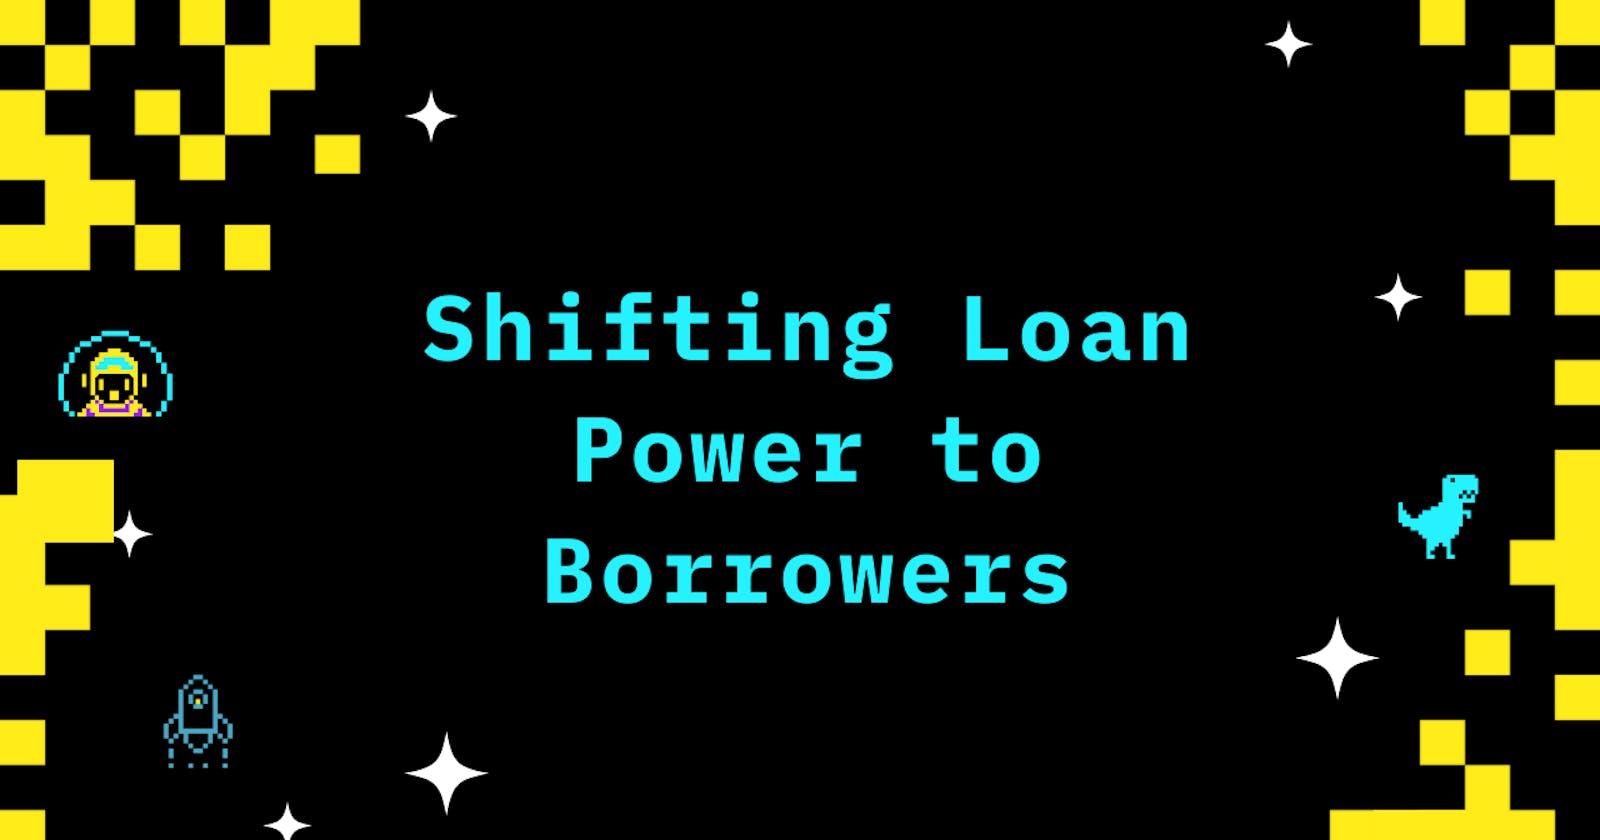 Shifting Loan Power to Borrowers